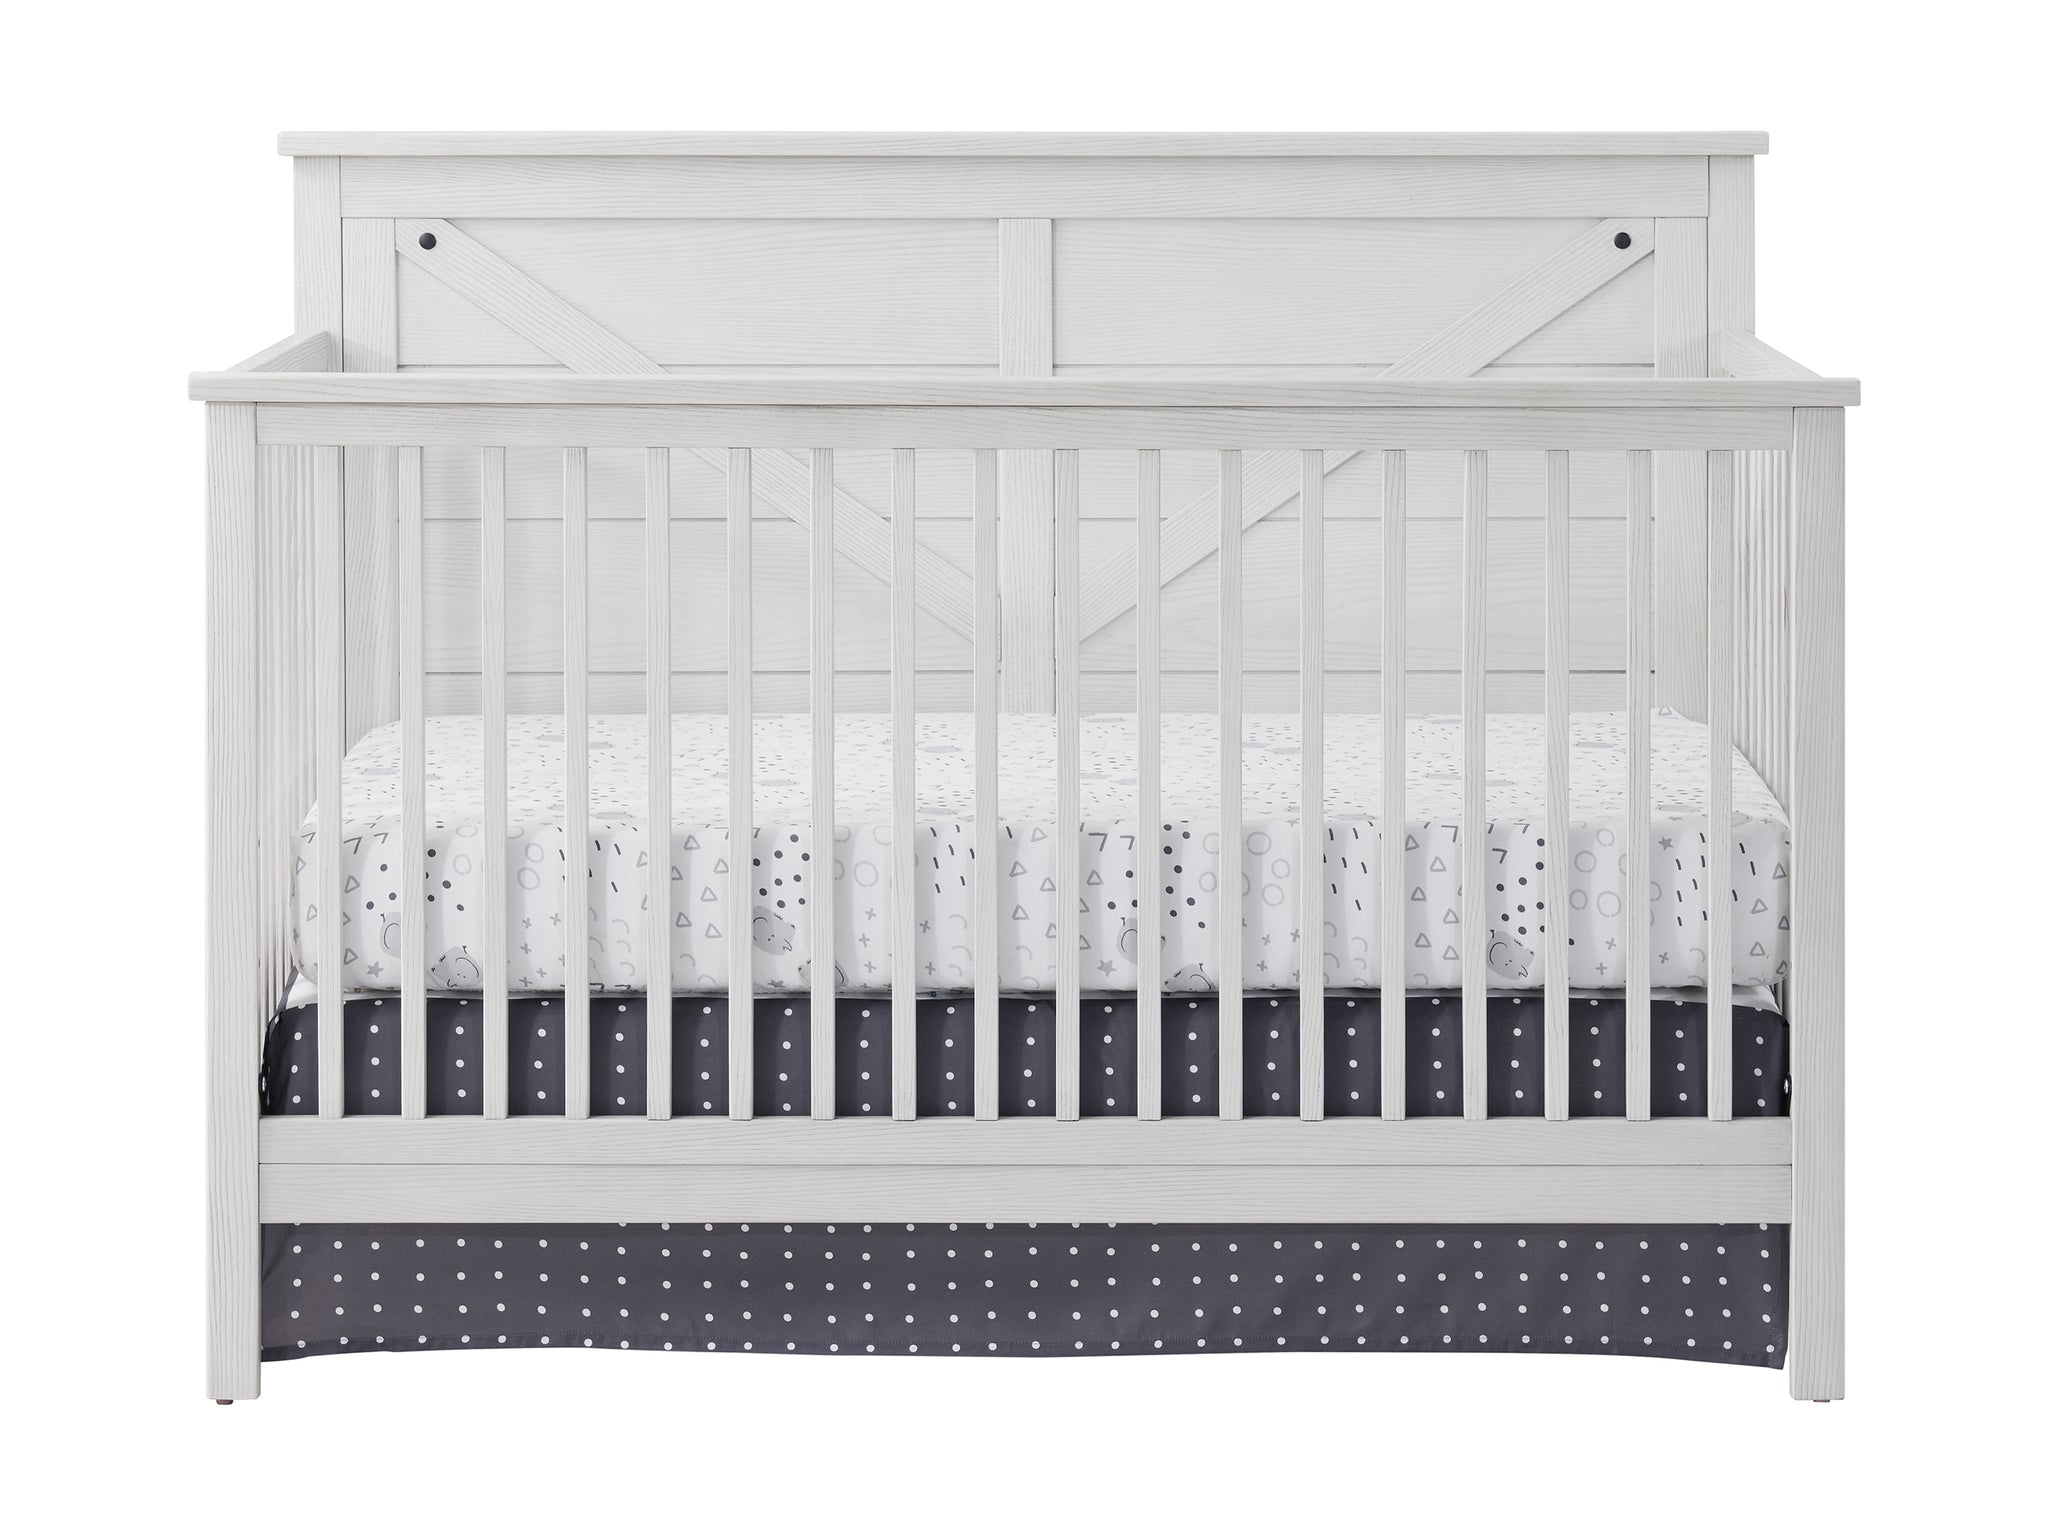 Oxford Baby Montauk 4 in 1 Convertible Crib